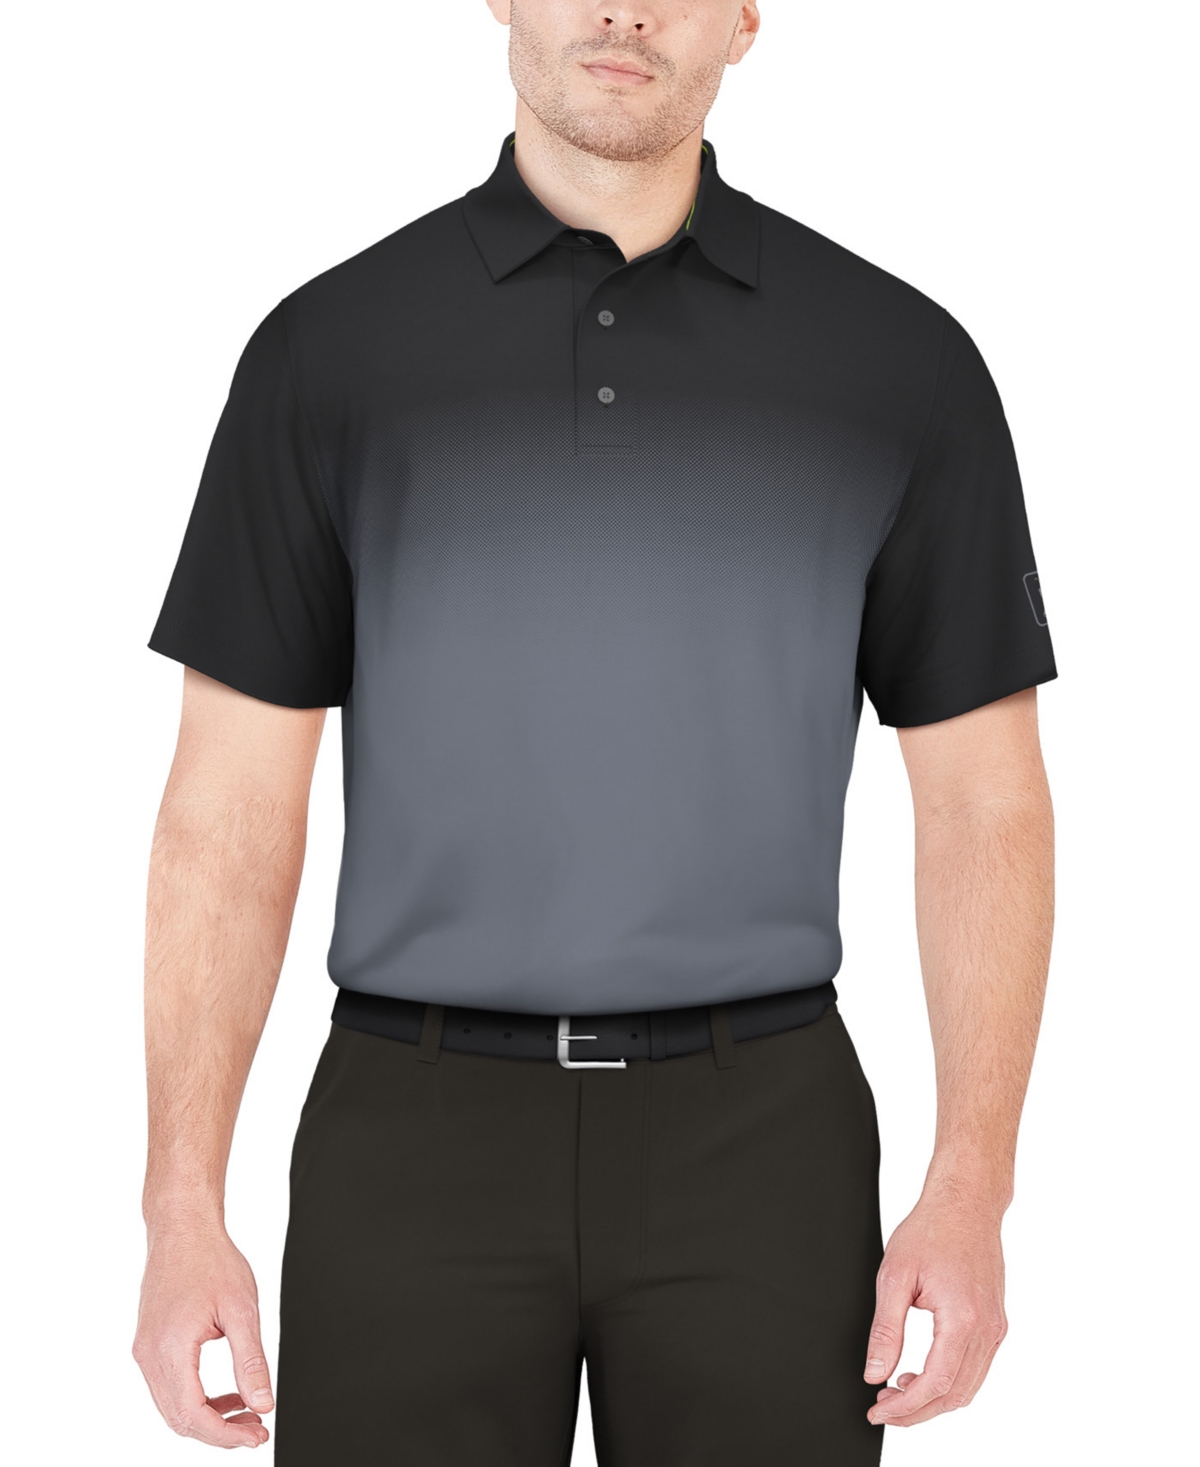 Men's Ombre Short Sleeve Performance Polo Shirt - Peacoat